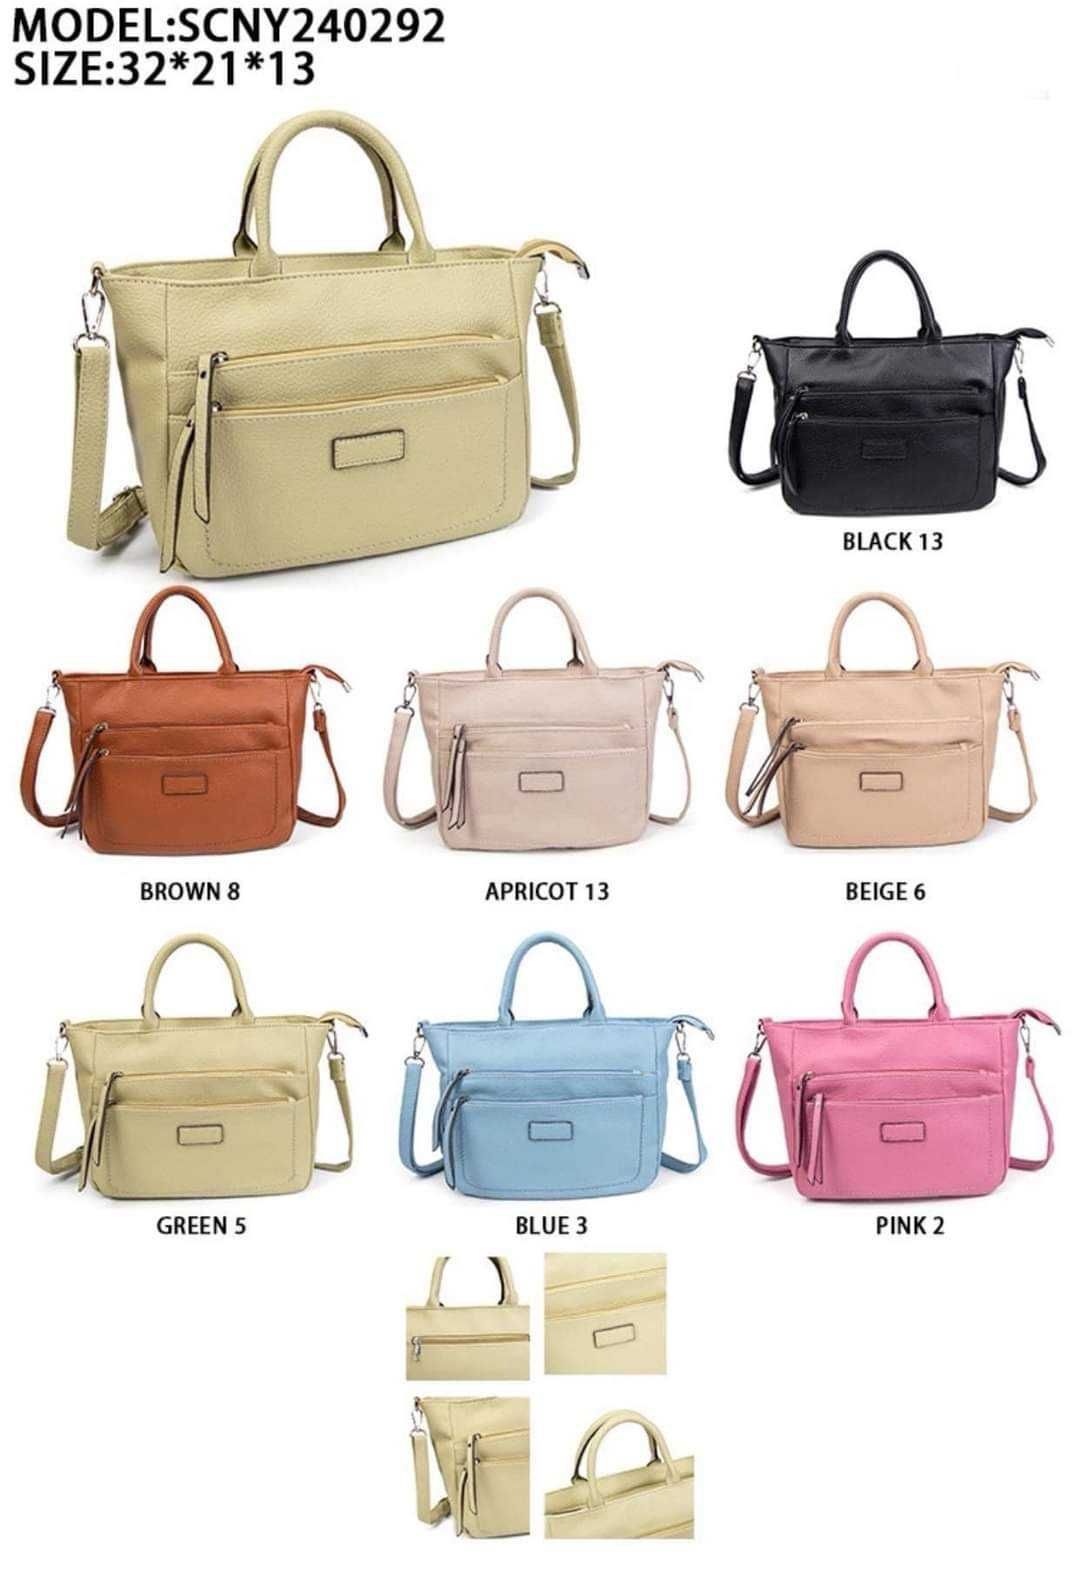 Bolsas e malas varias cores e modelos